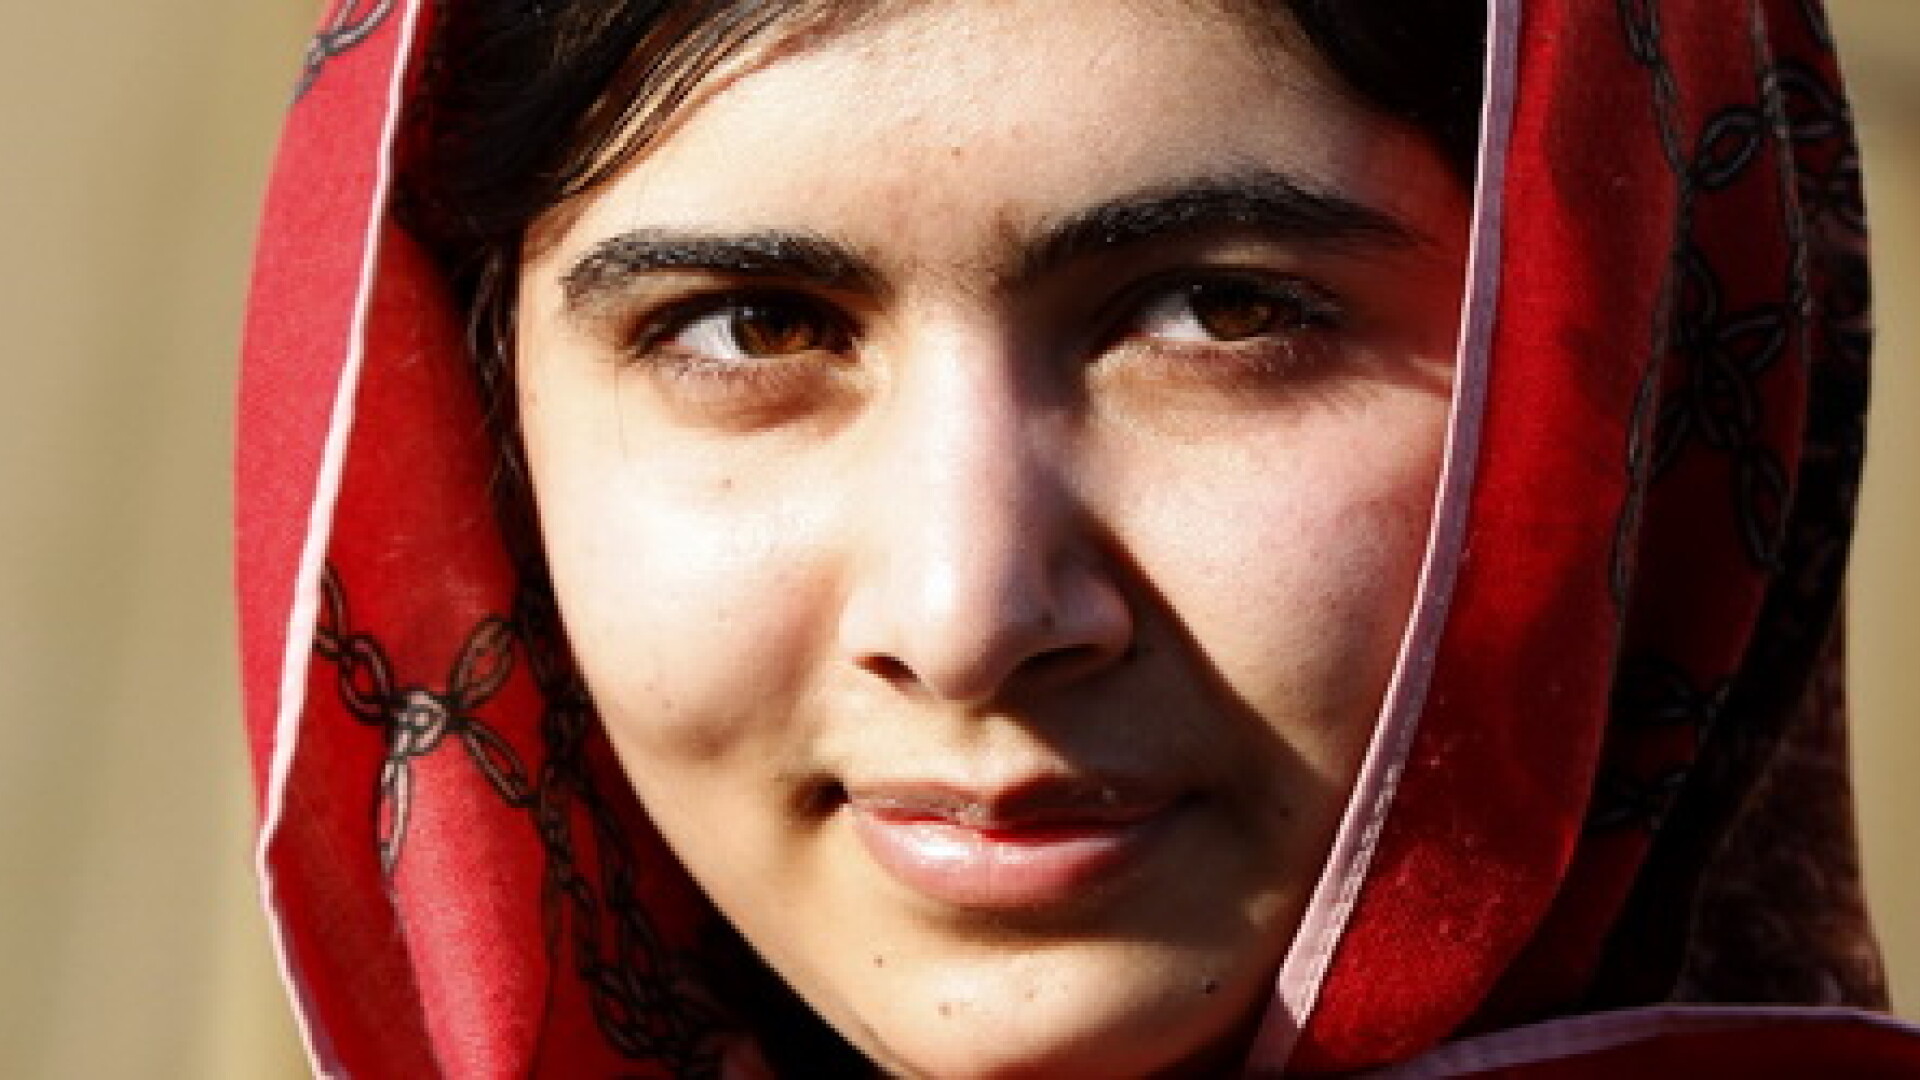 Malala Yousafzai cover